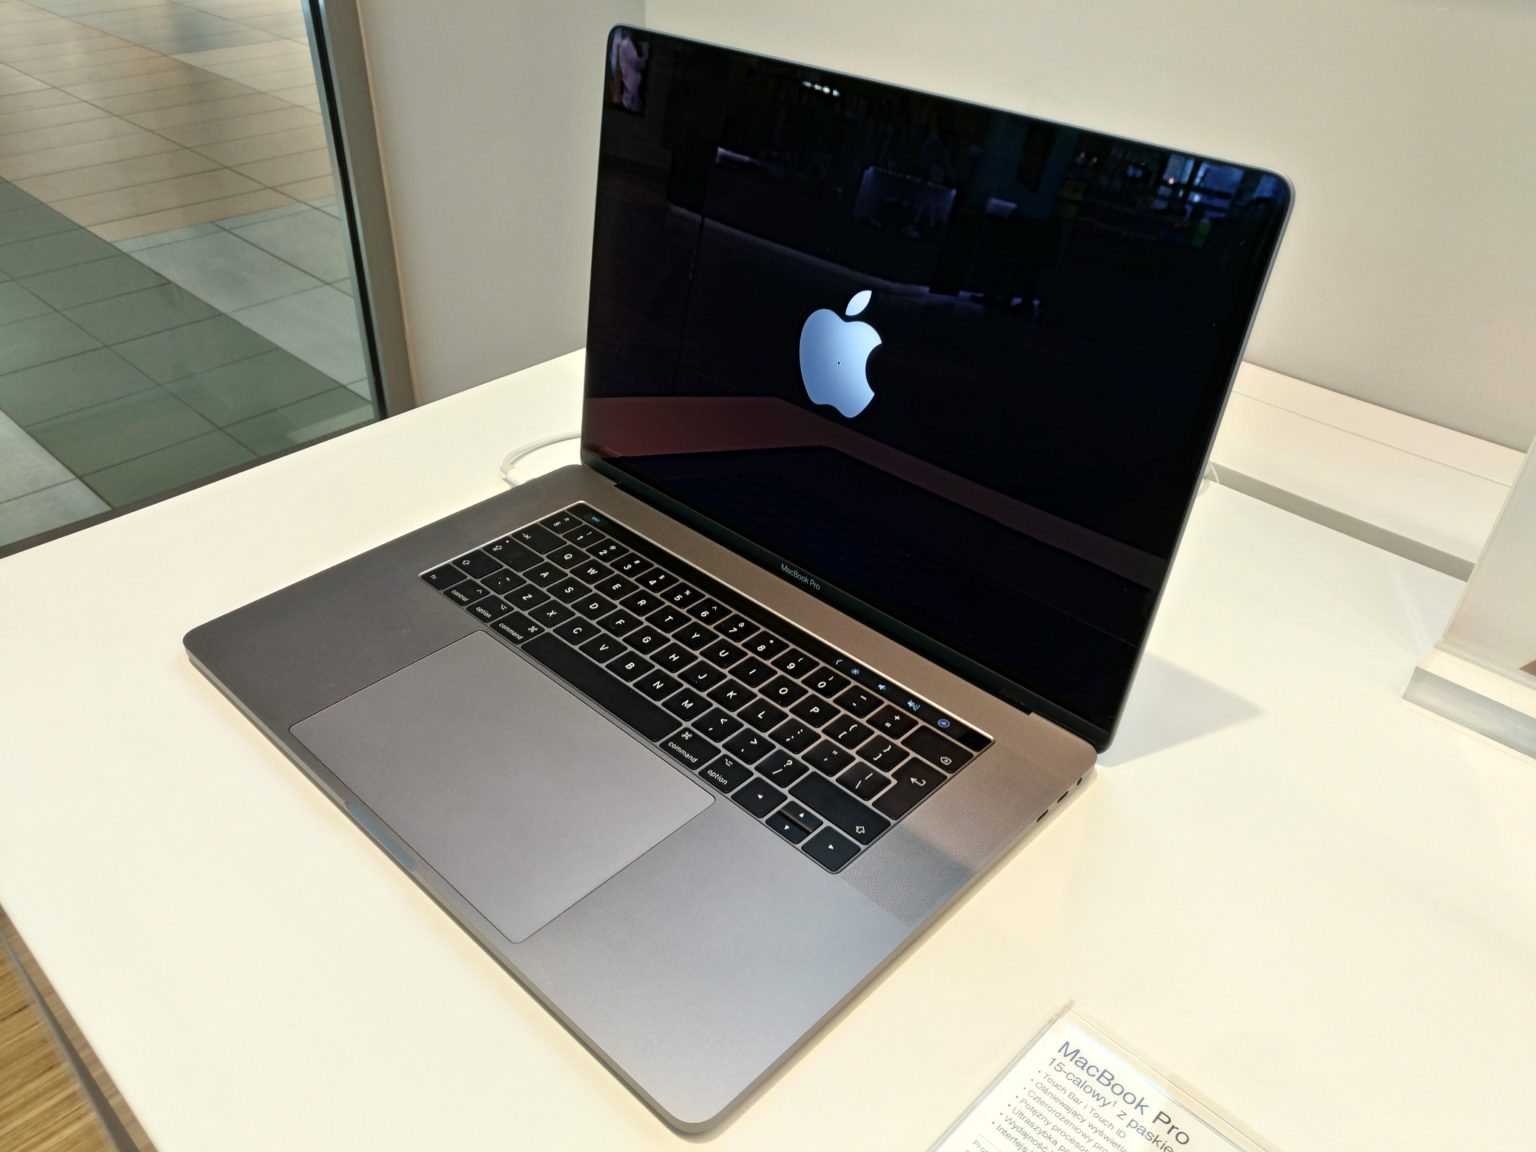 Tawaran Lebih Hebat dari Apple Selain MacBook Pro Terbaru